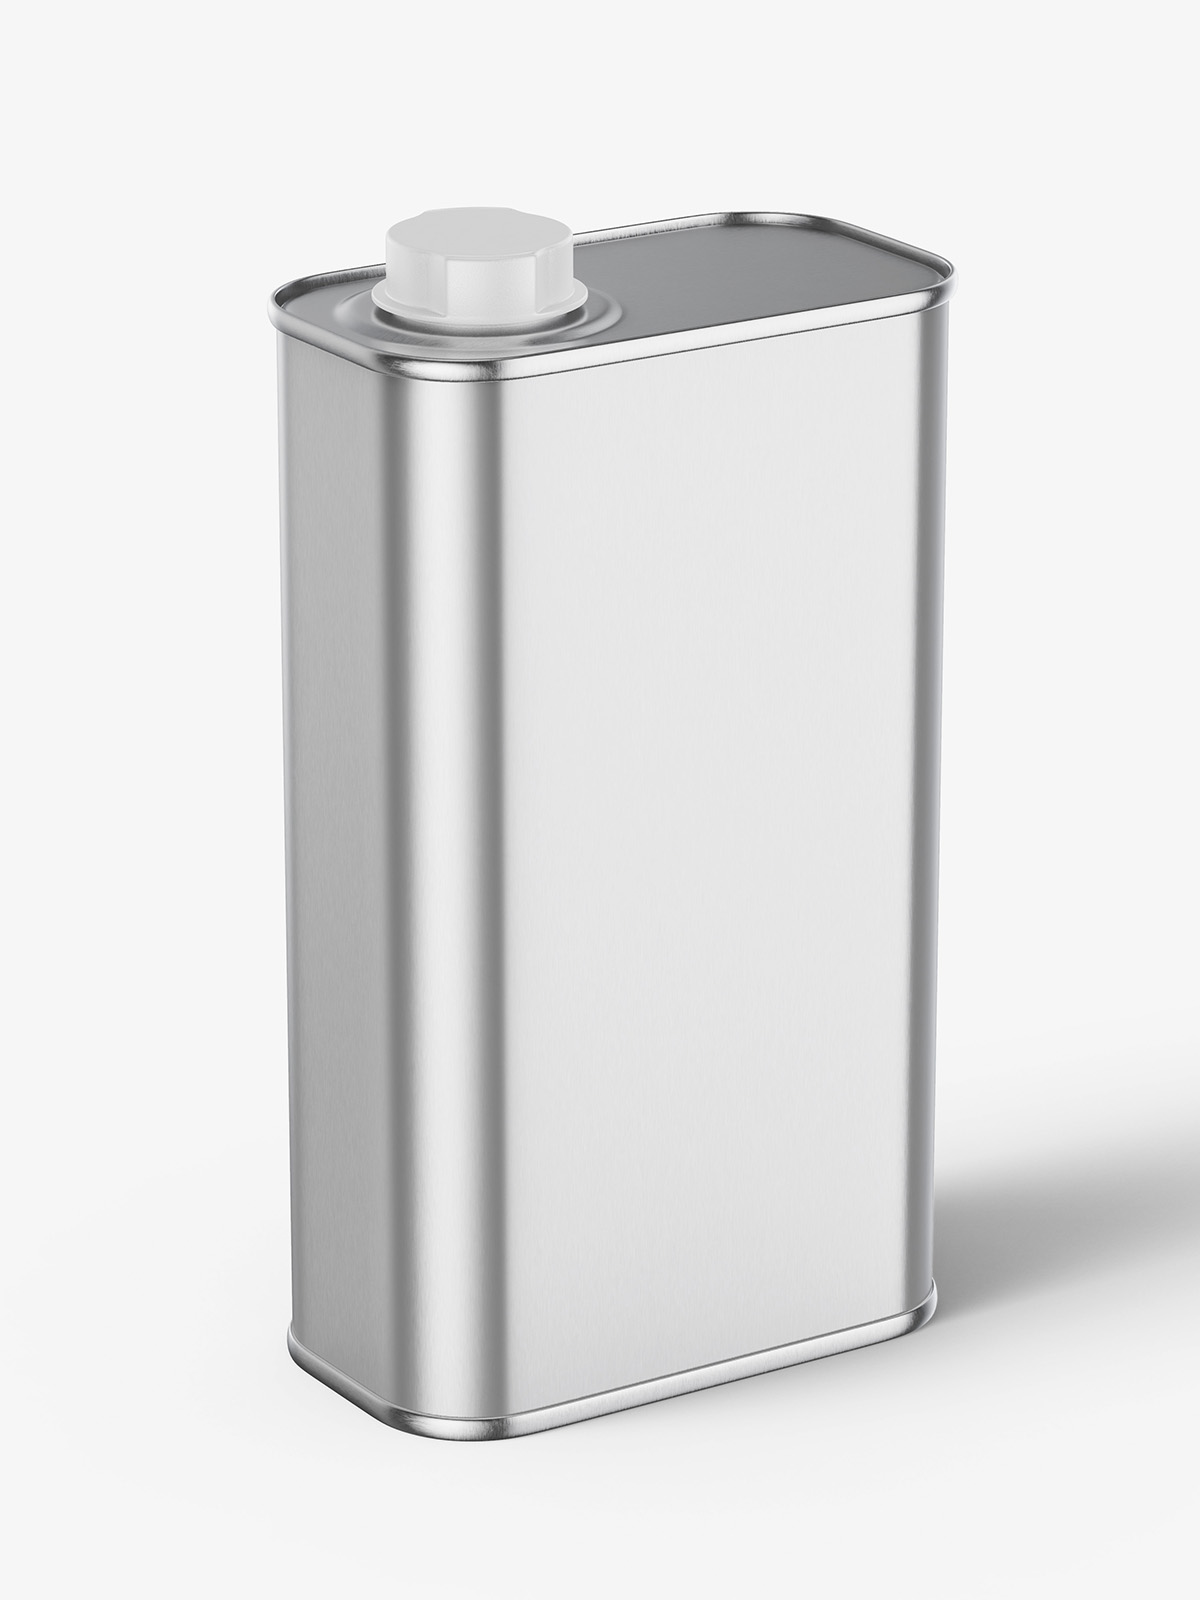 Download Metallic rectangle tin can mockup - Smarty Mockups